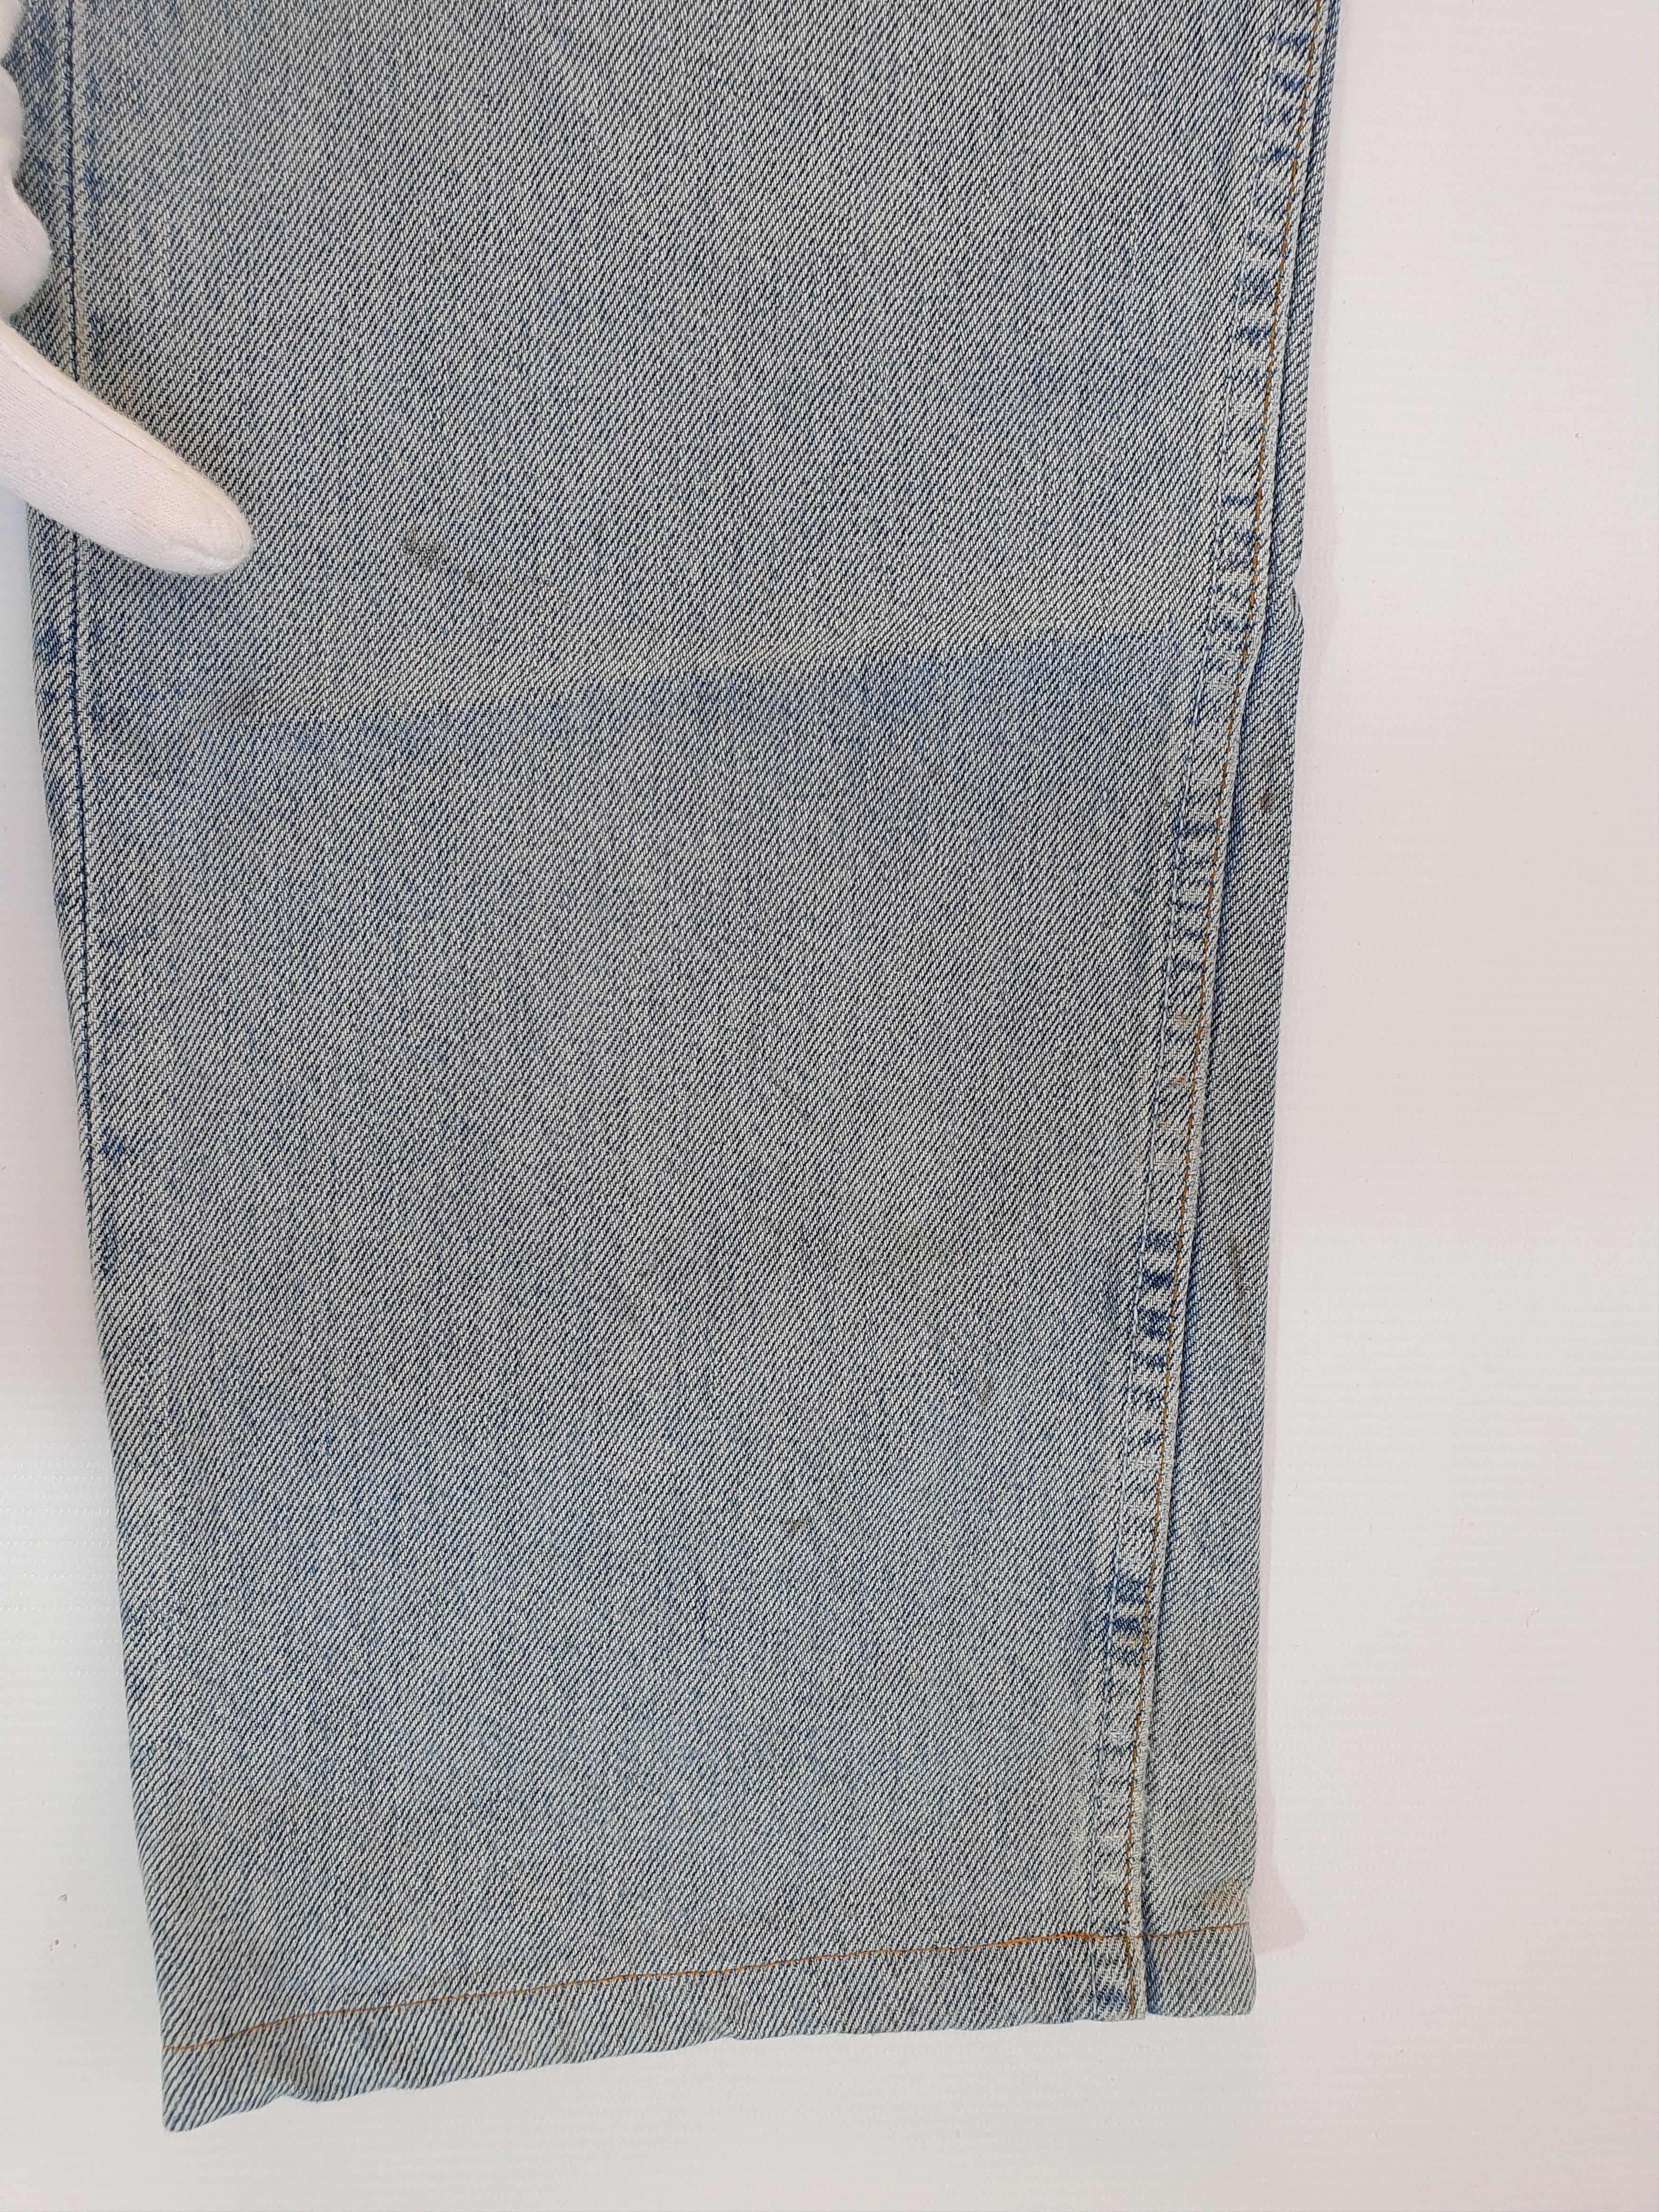 Vintage 1994 Vintage LEVIS 501 Dirty Distressed Jeans Size US 33 - 15 Thumbnail